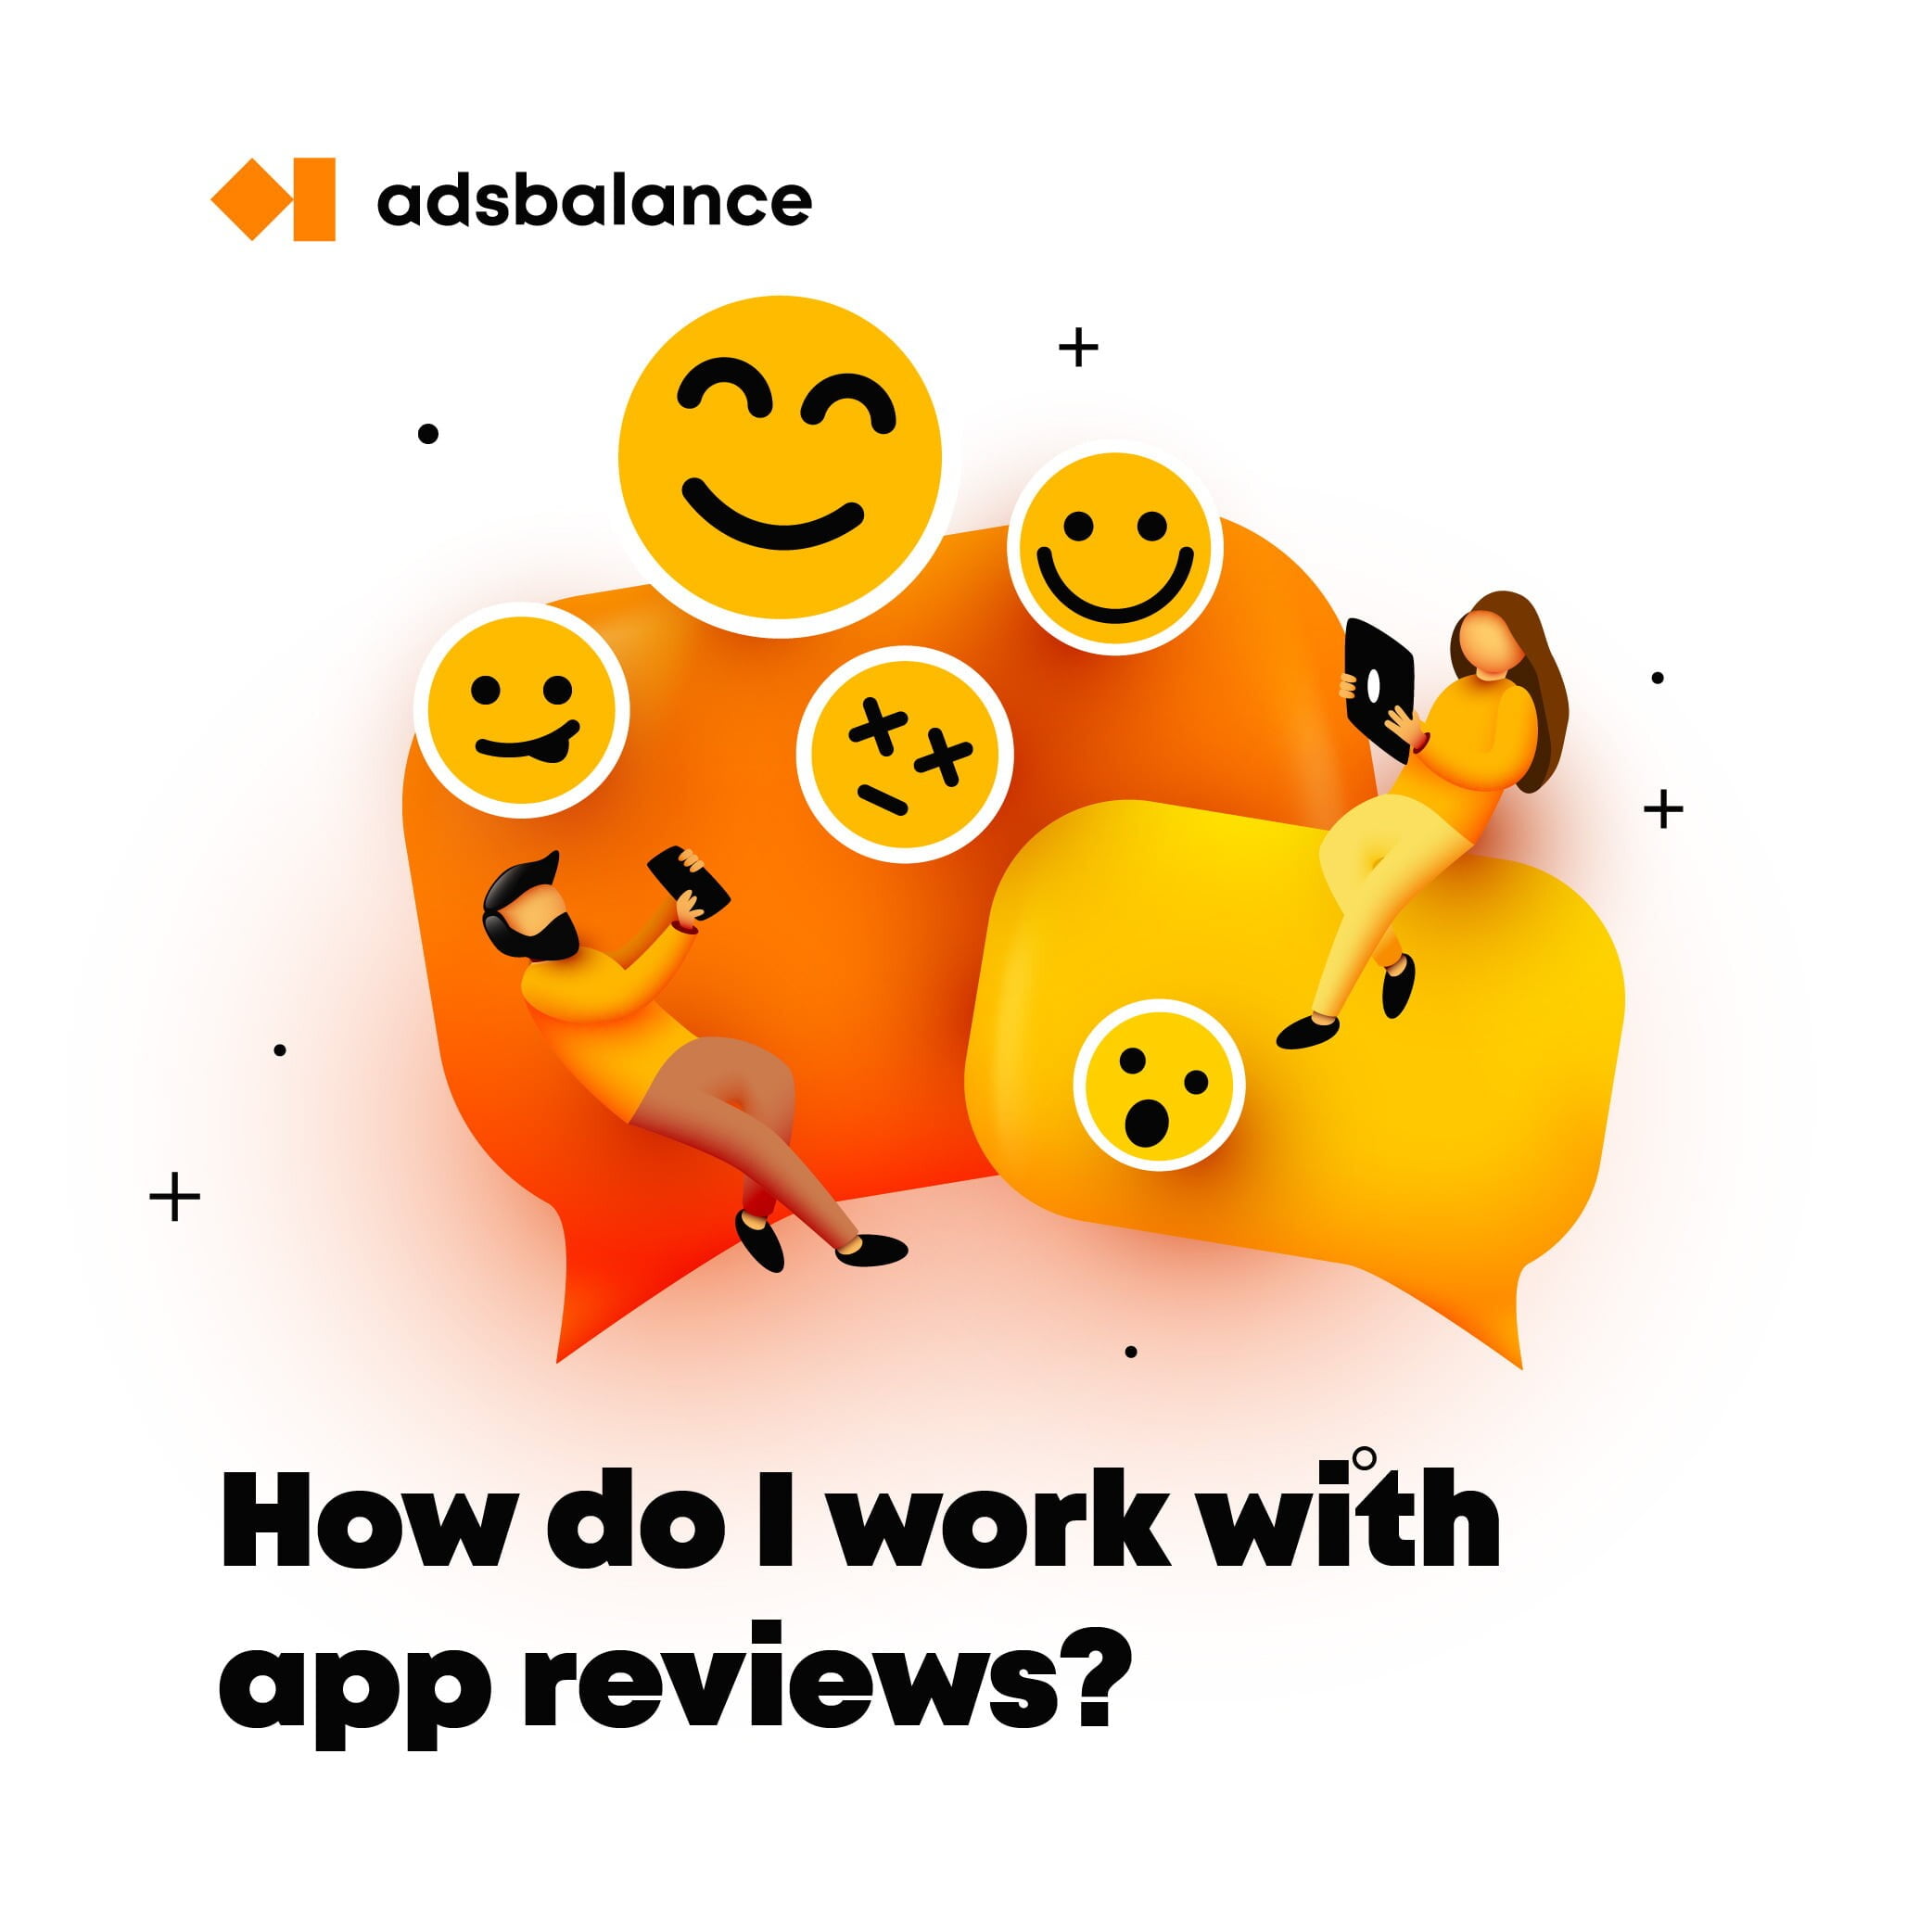 How do I work with app reviews?